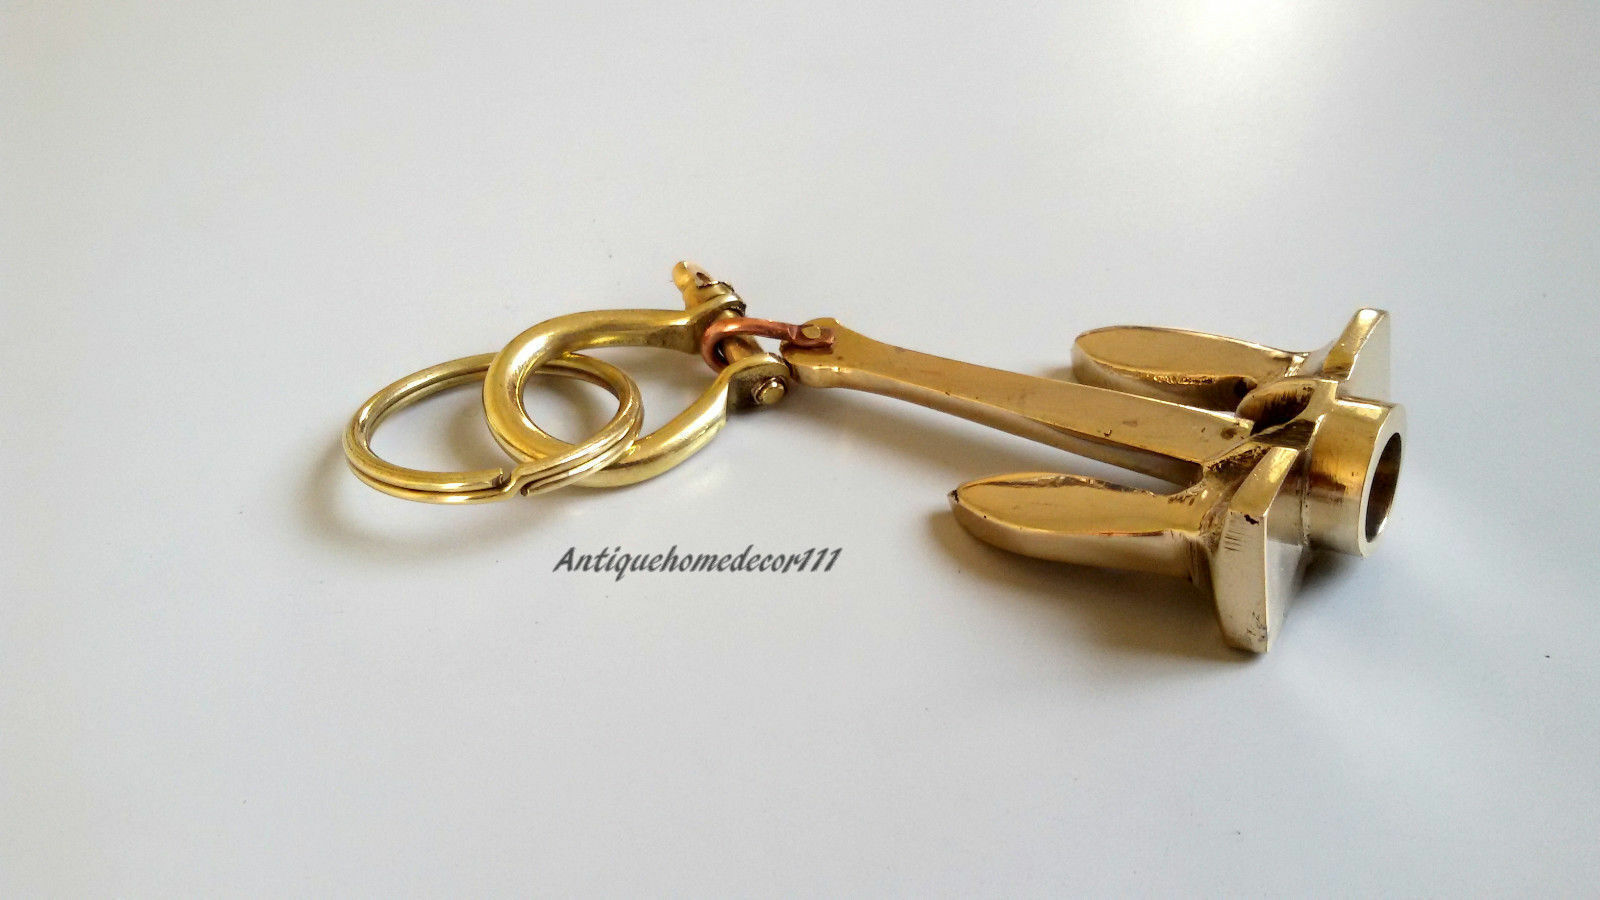 Lot of 6 Brass Anchor Keychains Nautical keychain handcuff keychain Gift Items Без бренда - фотография #4